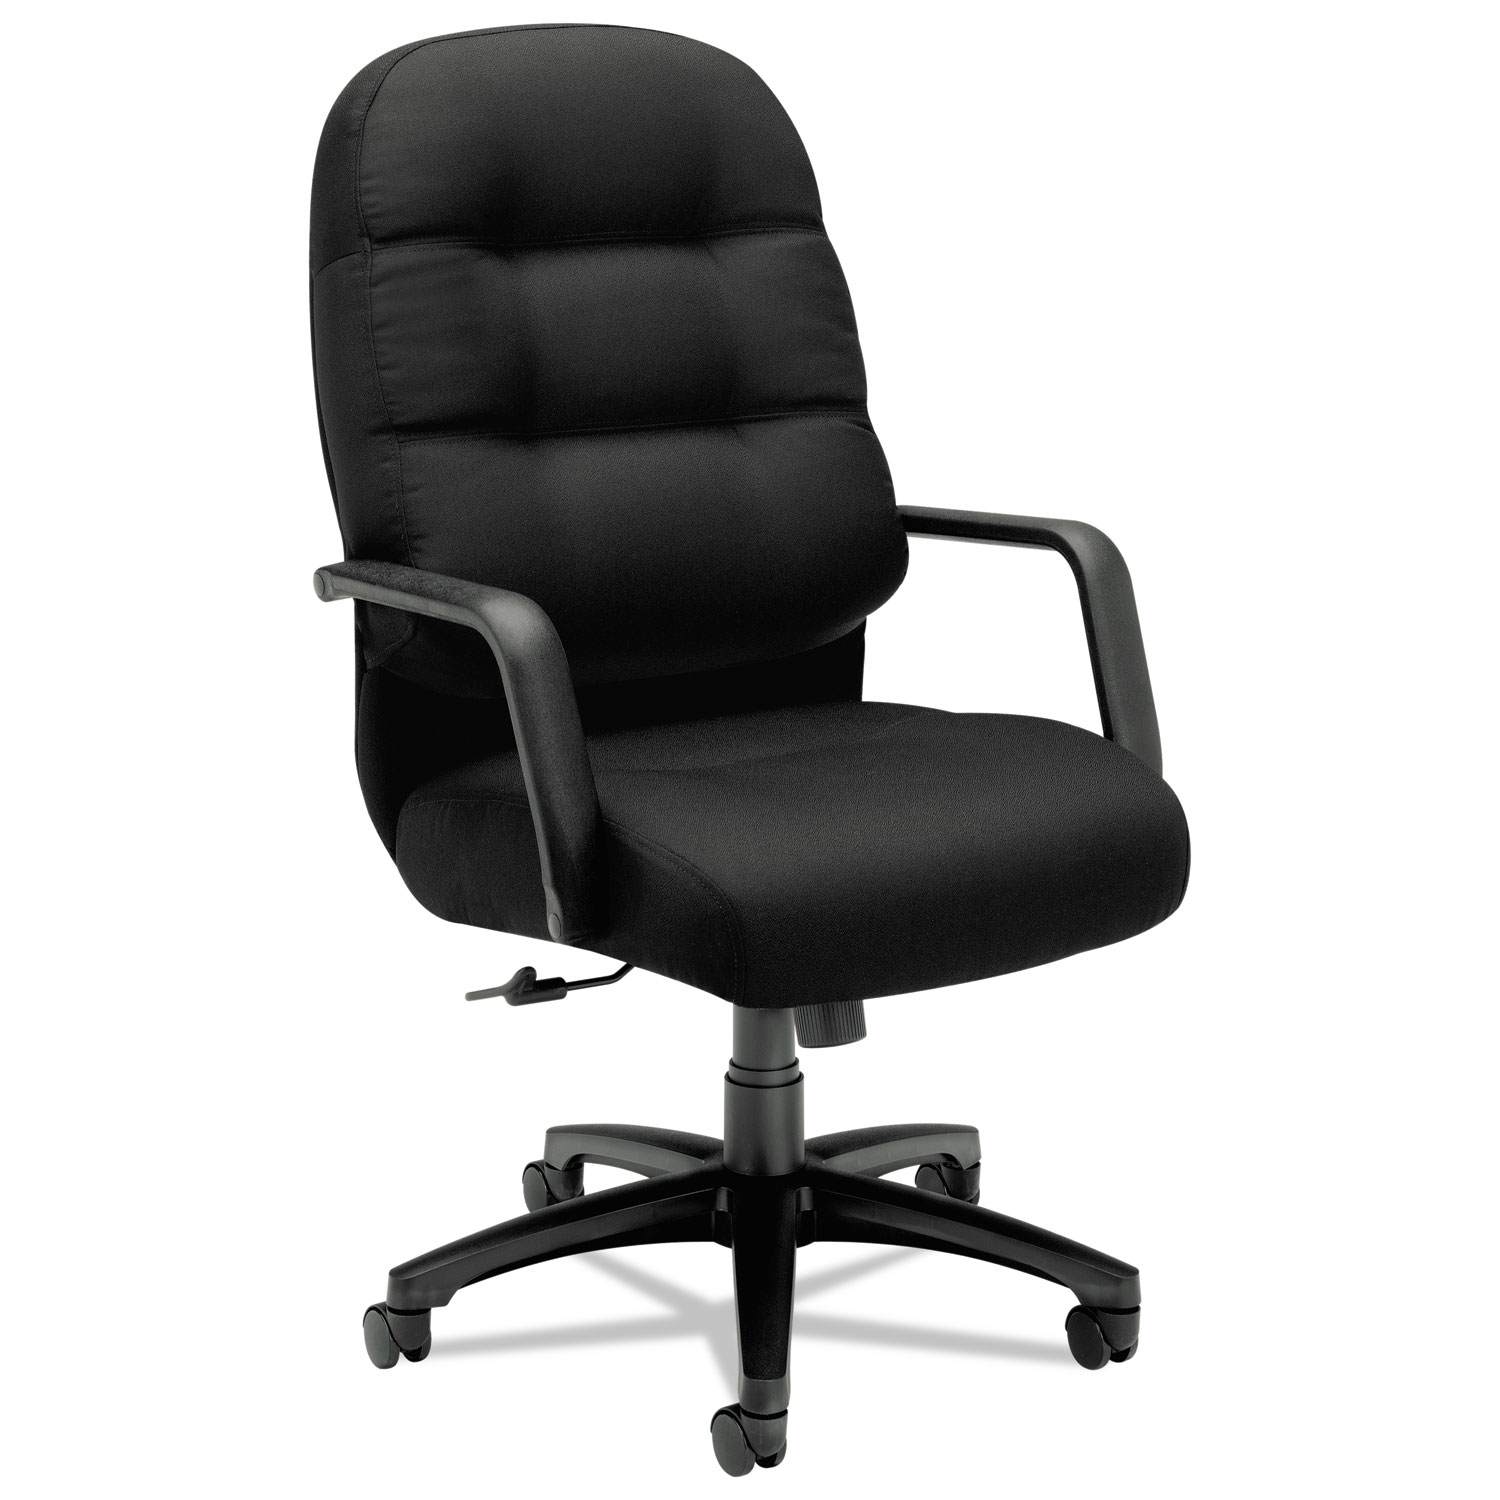 Pillow-Soft 2090 Series Executive High-Back Swivel/Tilt Chair, Black